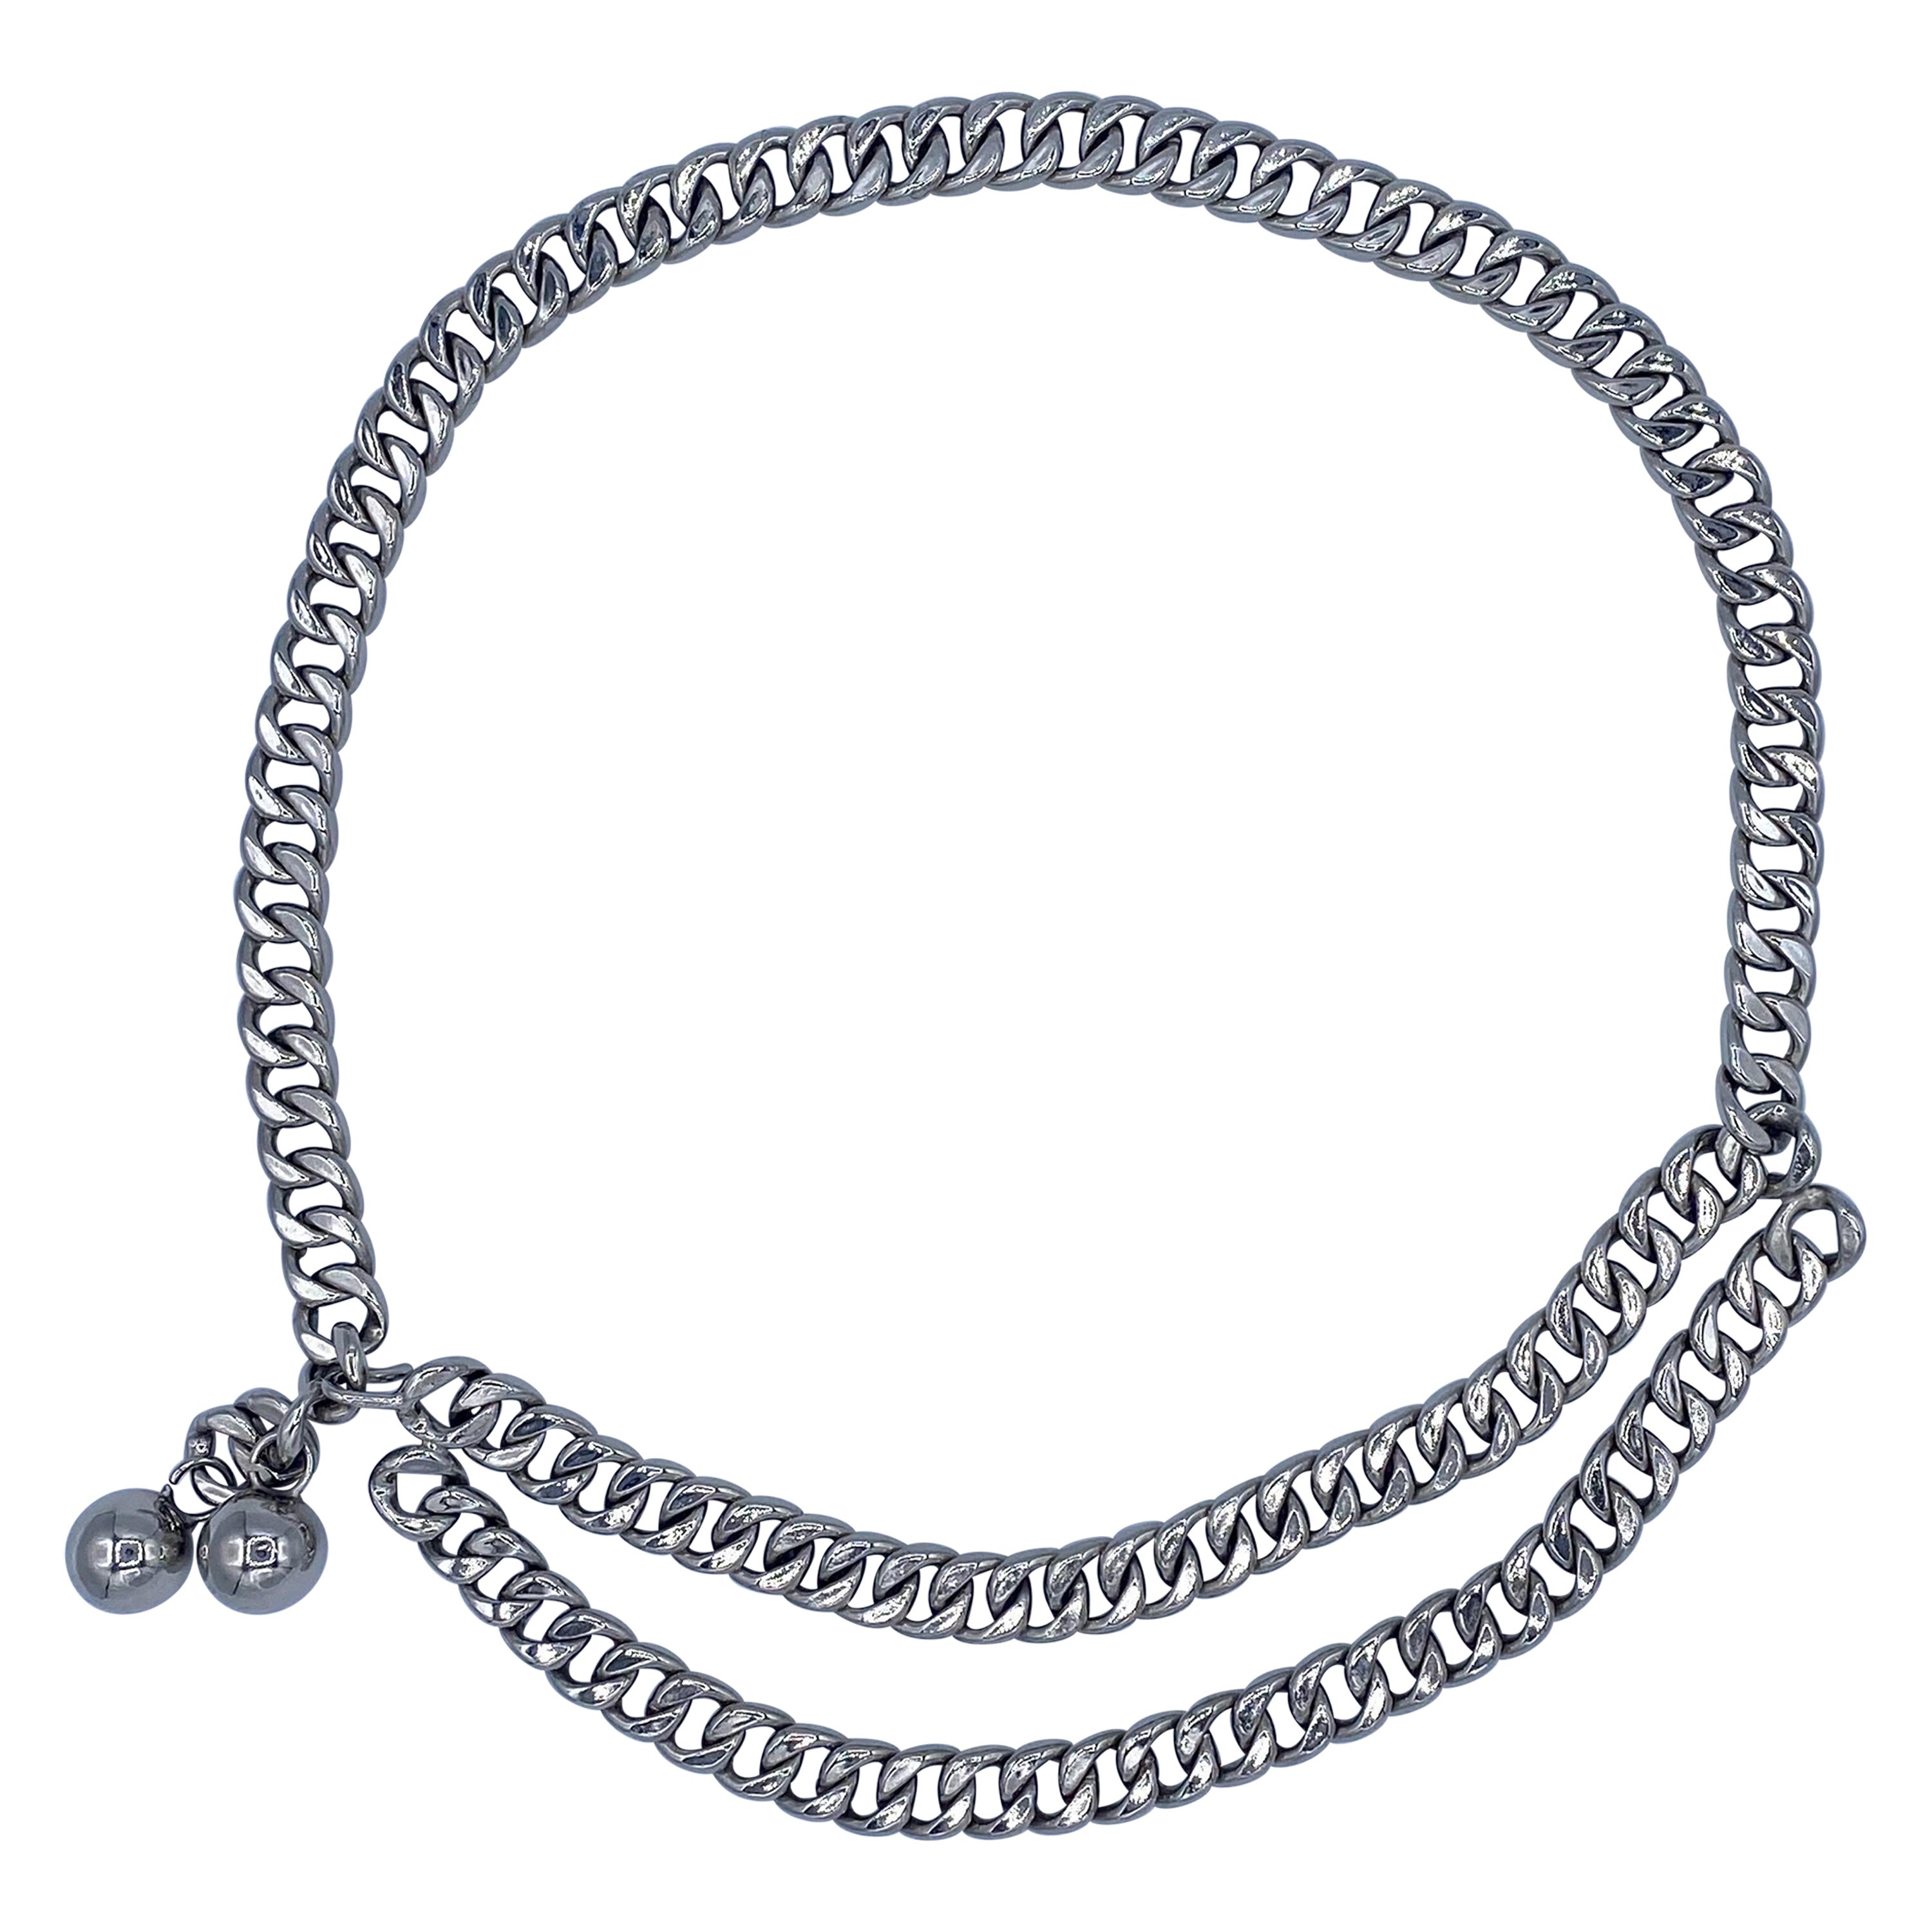 Vintage Chanel heavy silver chain link belt